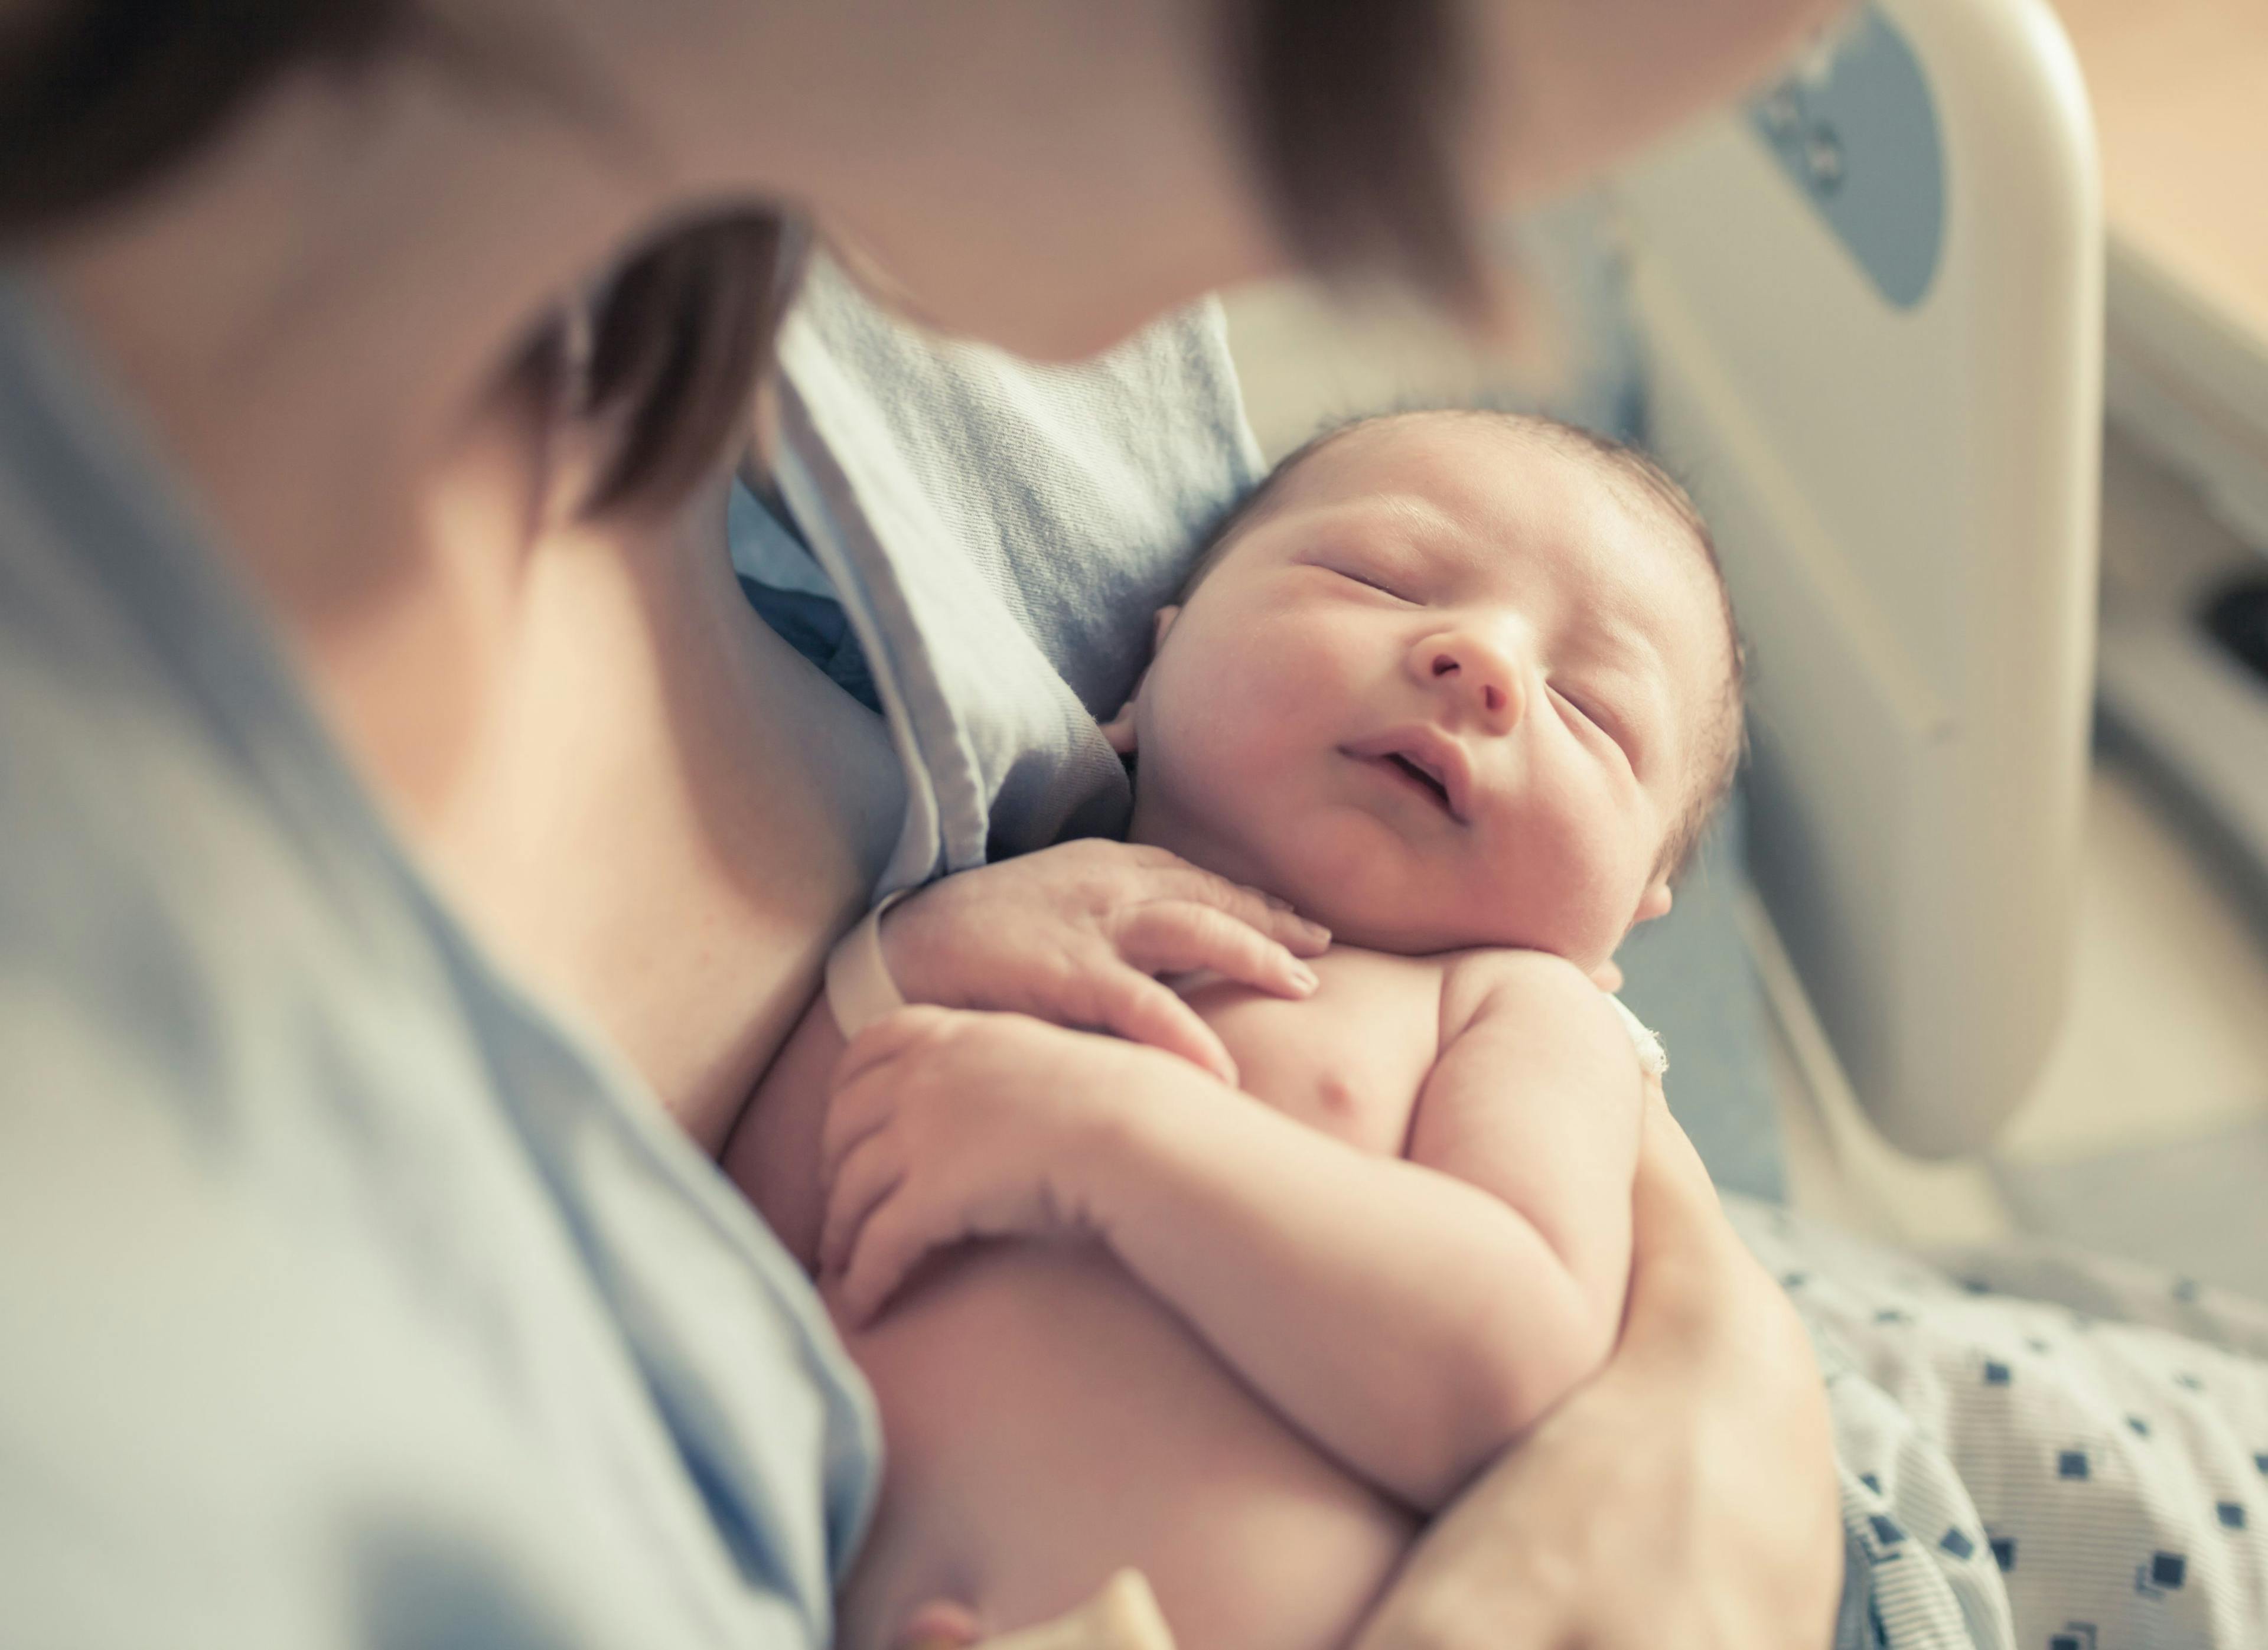 Navigation Program Could Help Reduce Postpartum Hospitalizations